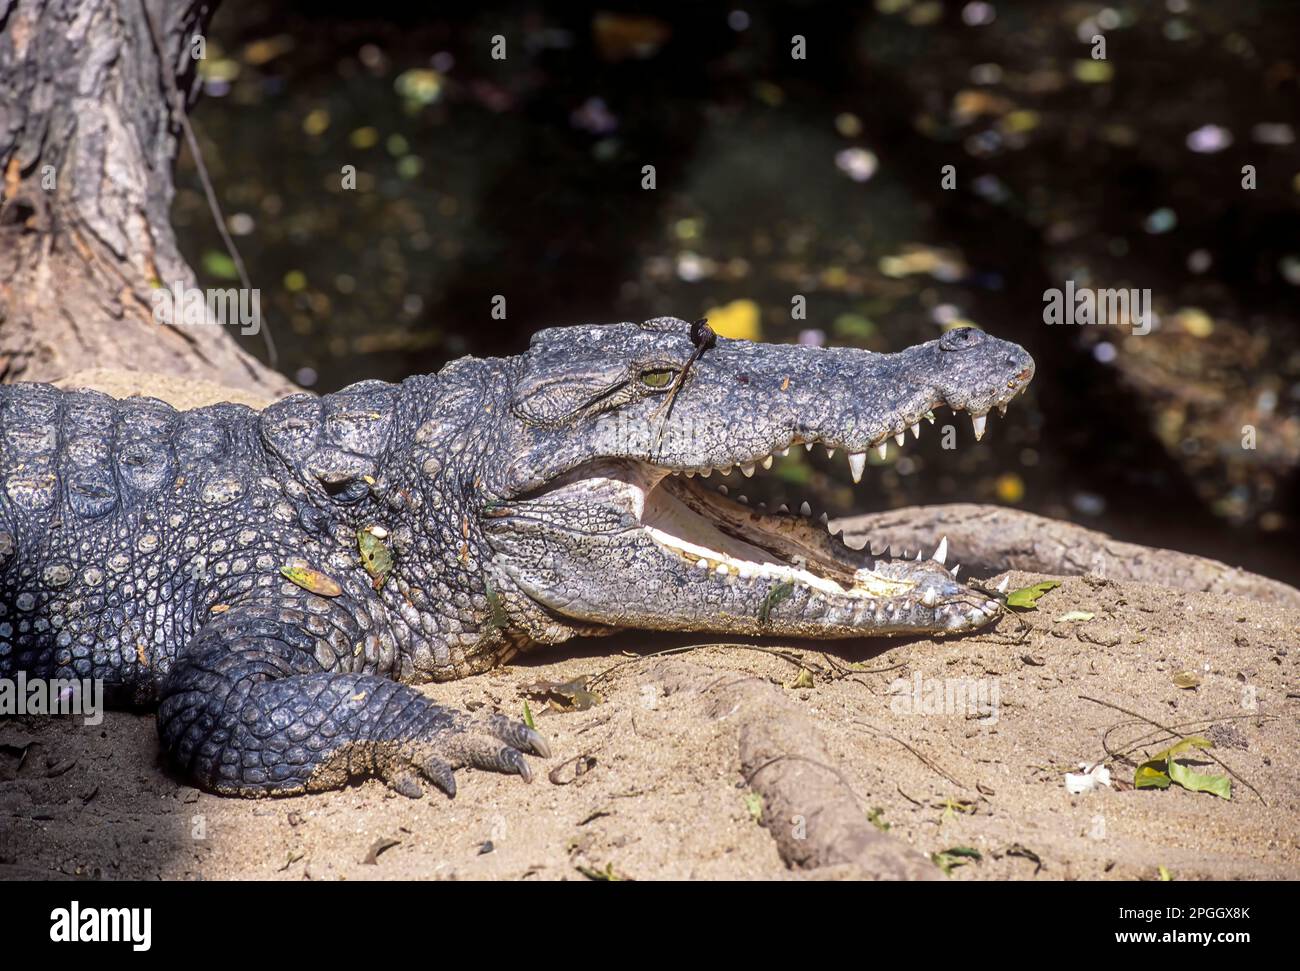 Reptile Mugger oder Sumpfkrokodil (Crocodylus palustris) in Madras Crocodile Bank bei Chennai, Tamil Nadu, Südindien, Indien, Asien Stockfoto